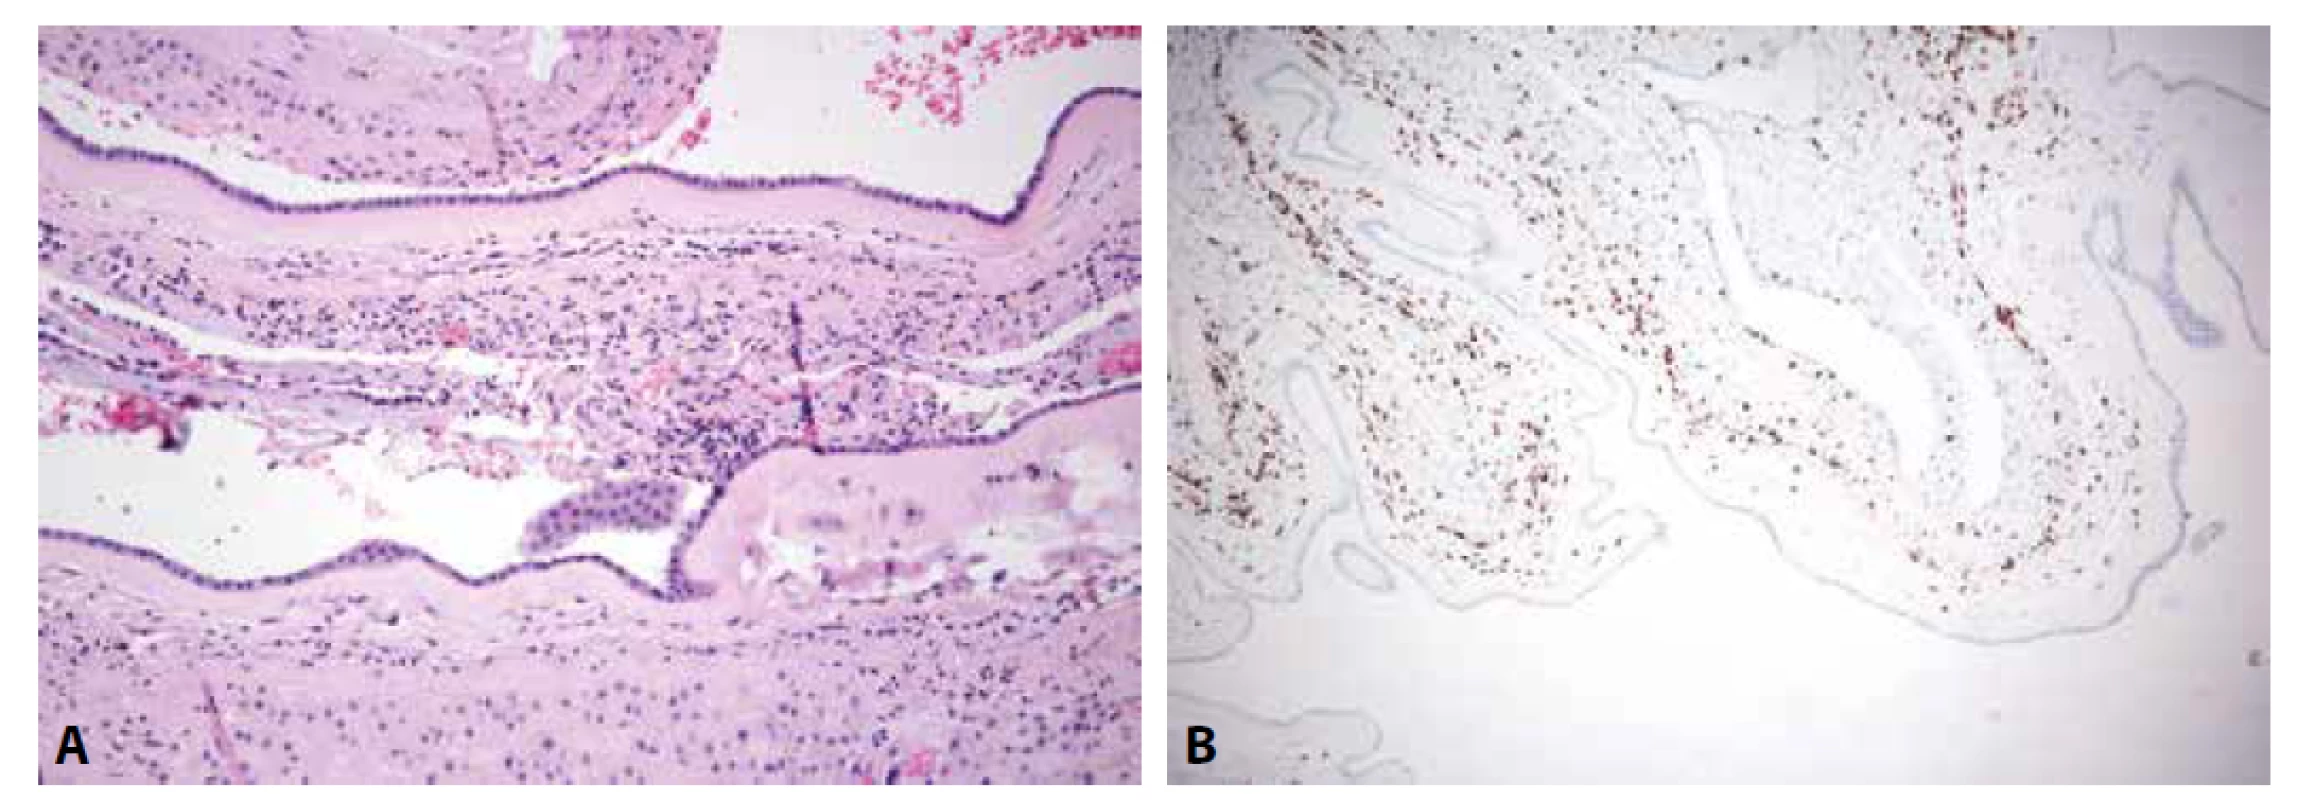 A: Chronická chorioamnionitida plodových obalů (HE, 200x). B: Chronická chorioamnionitida. CD8 pozitivní lymfocyty v chorioamniální
pojivé tkáni (CD8, 100x).